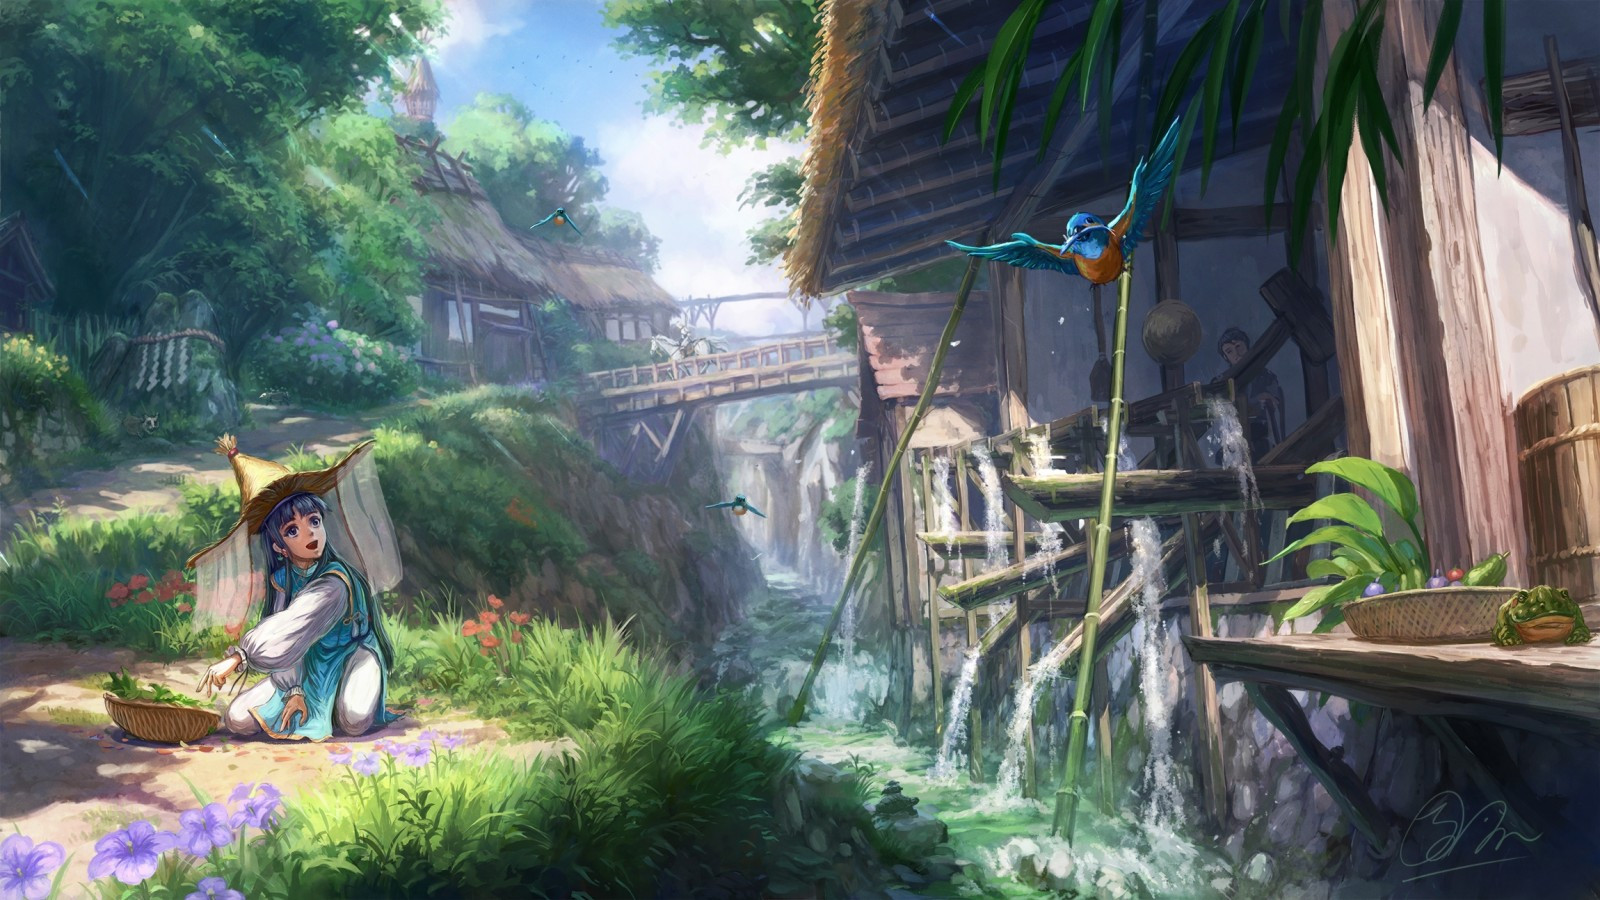 Download 1600x900 Anime Village, Bridge, Water, Houses, People, Scenic, Calm Wallpaper